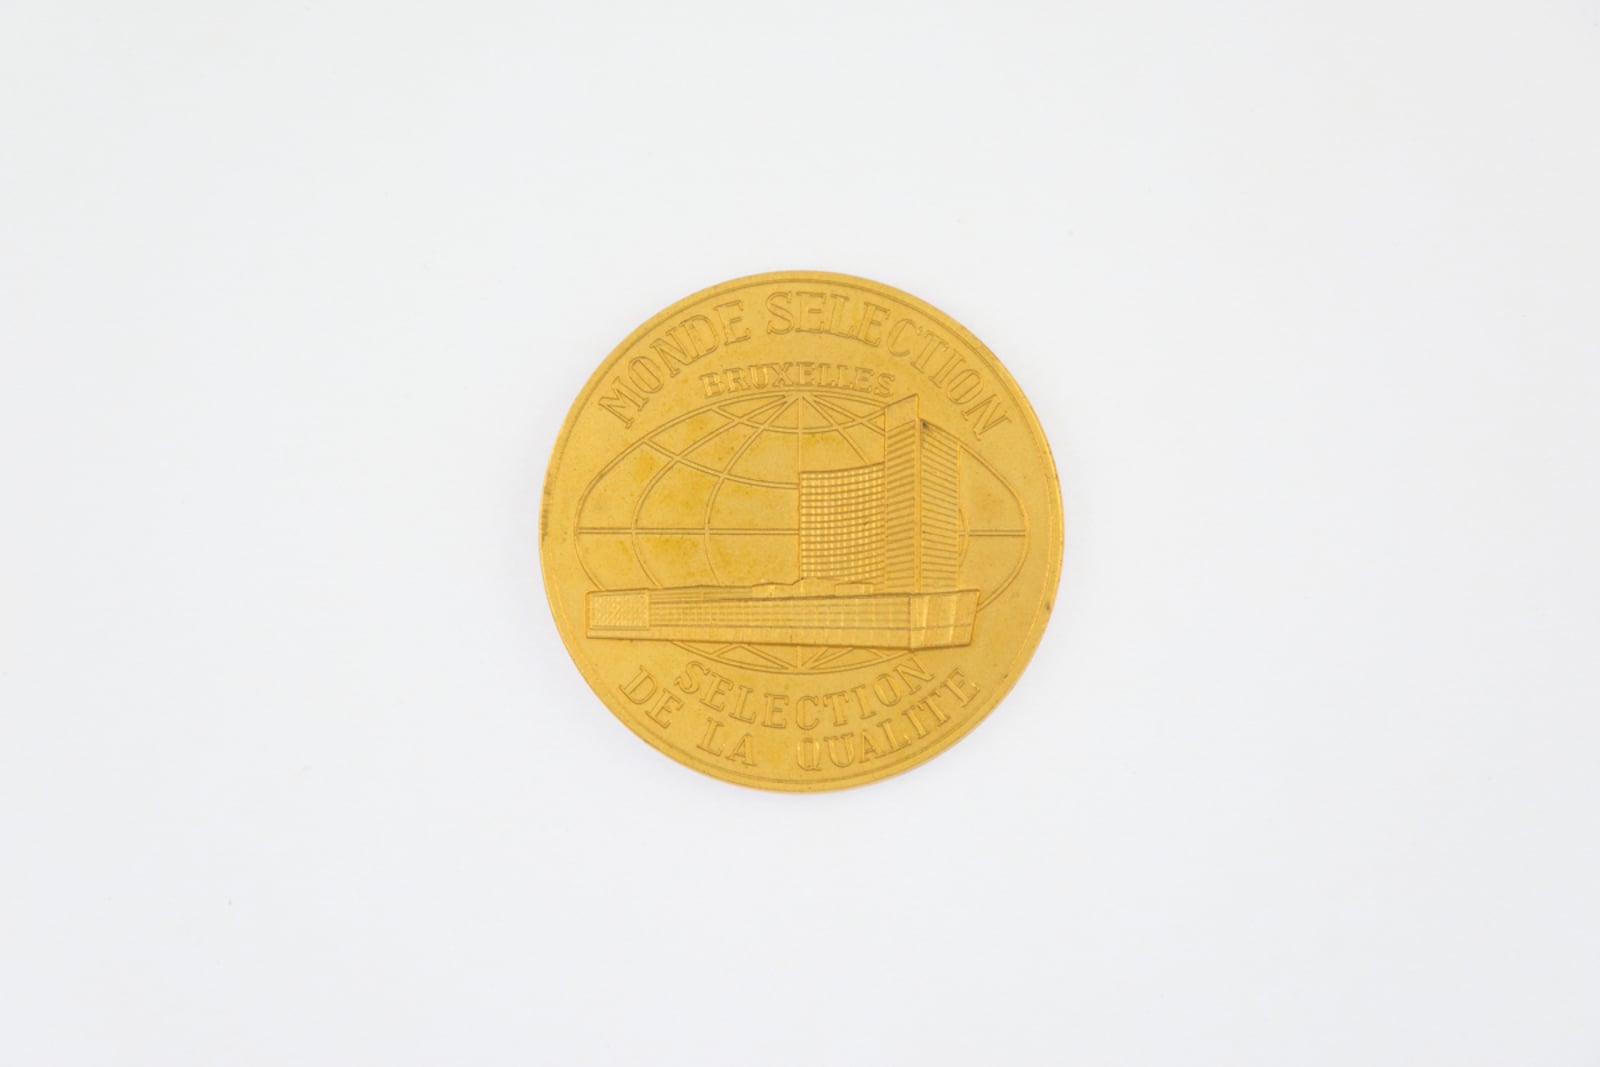 Monde Selection Bruxelles Medaille d'Orl 1979